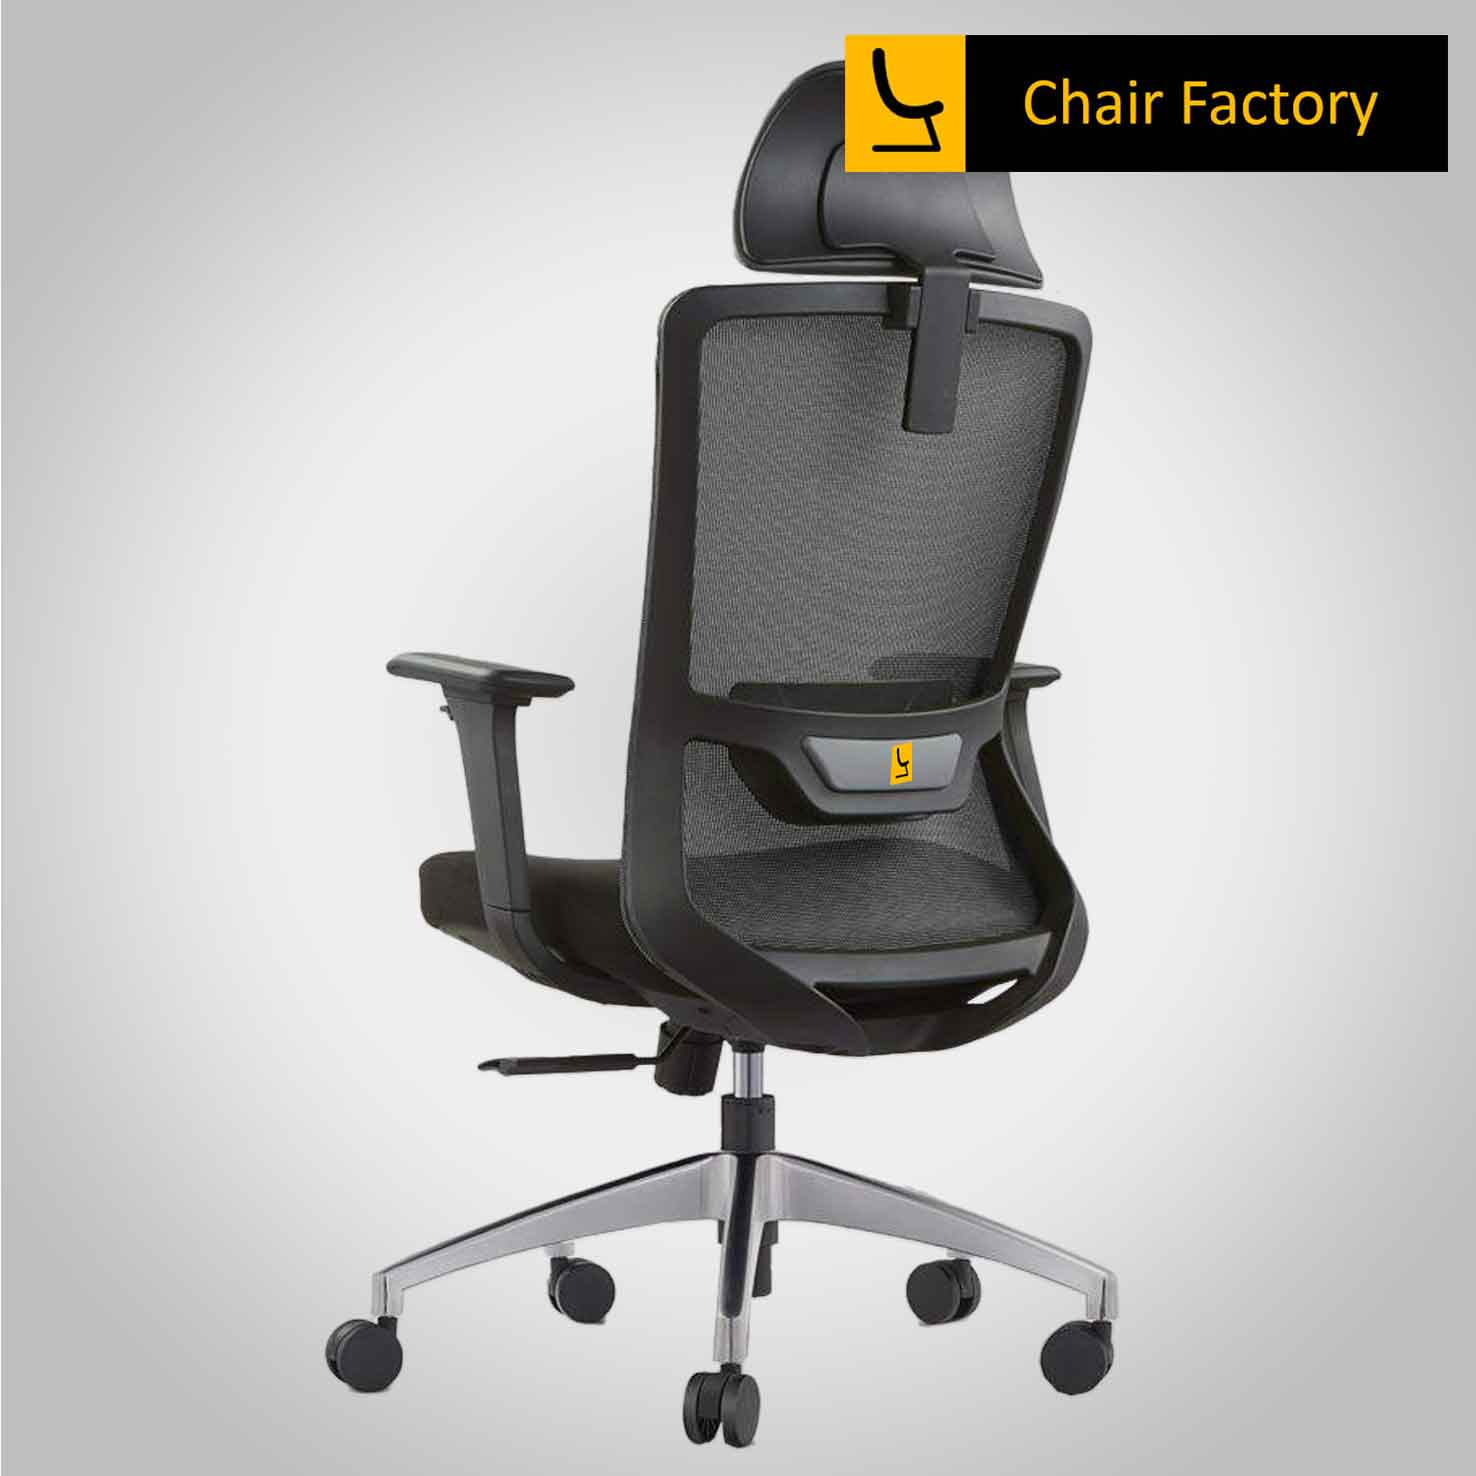 Black Blazer Imported Computer Chair